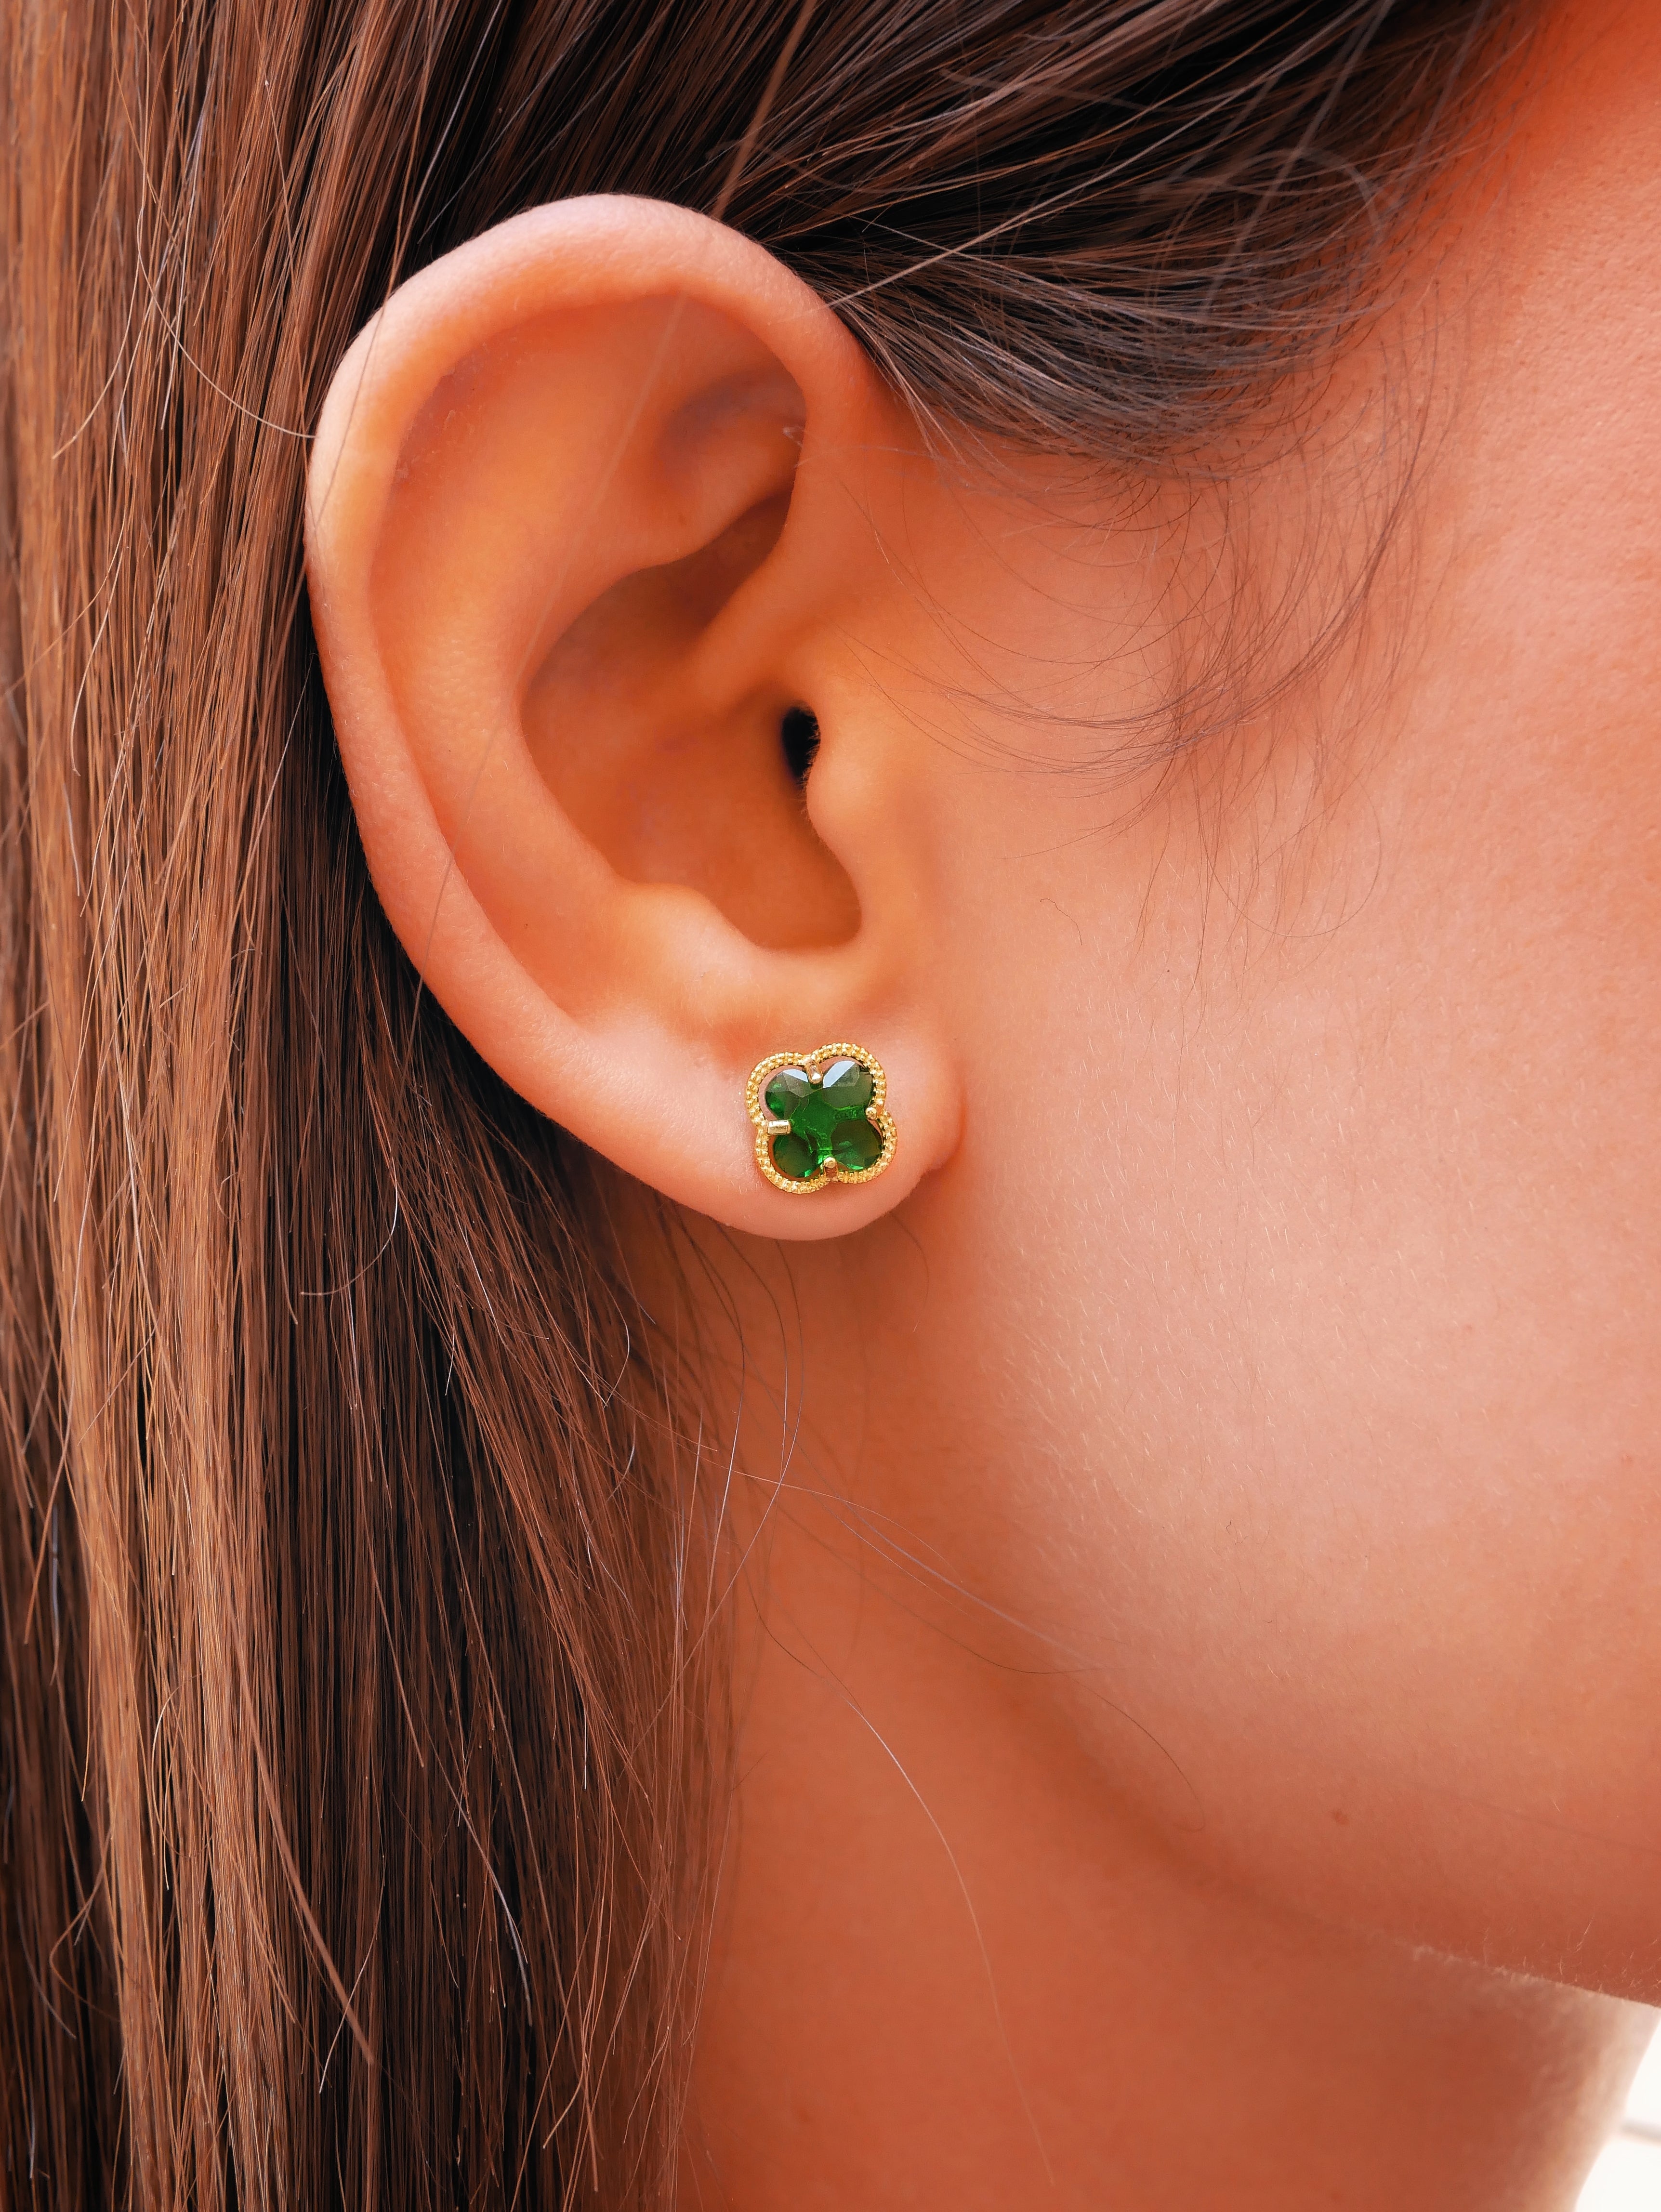 Clover earrings with emerald quartz